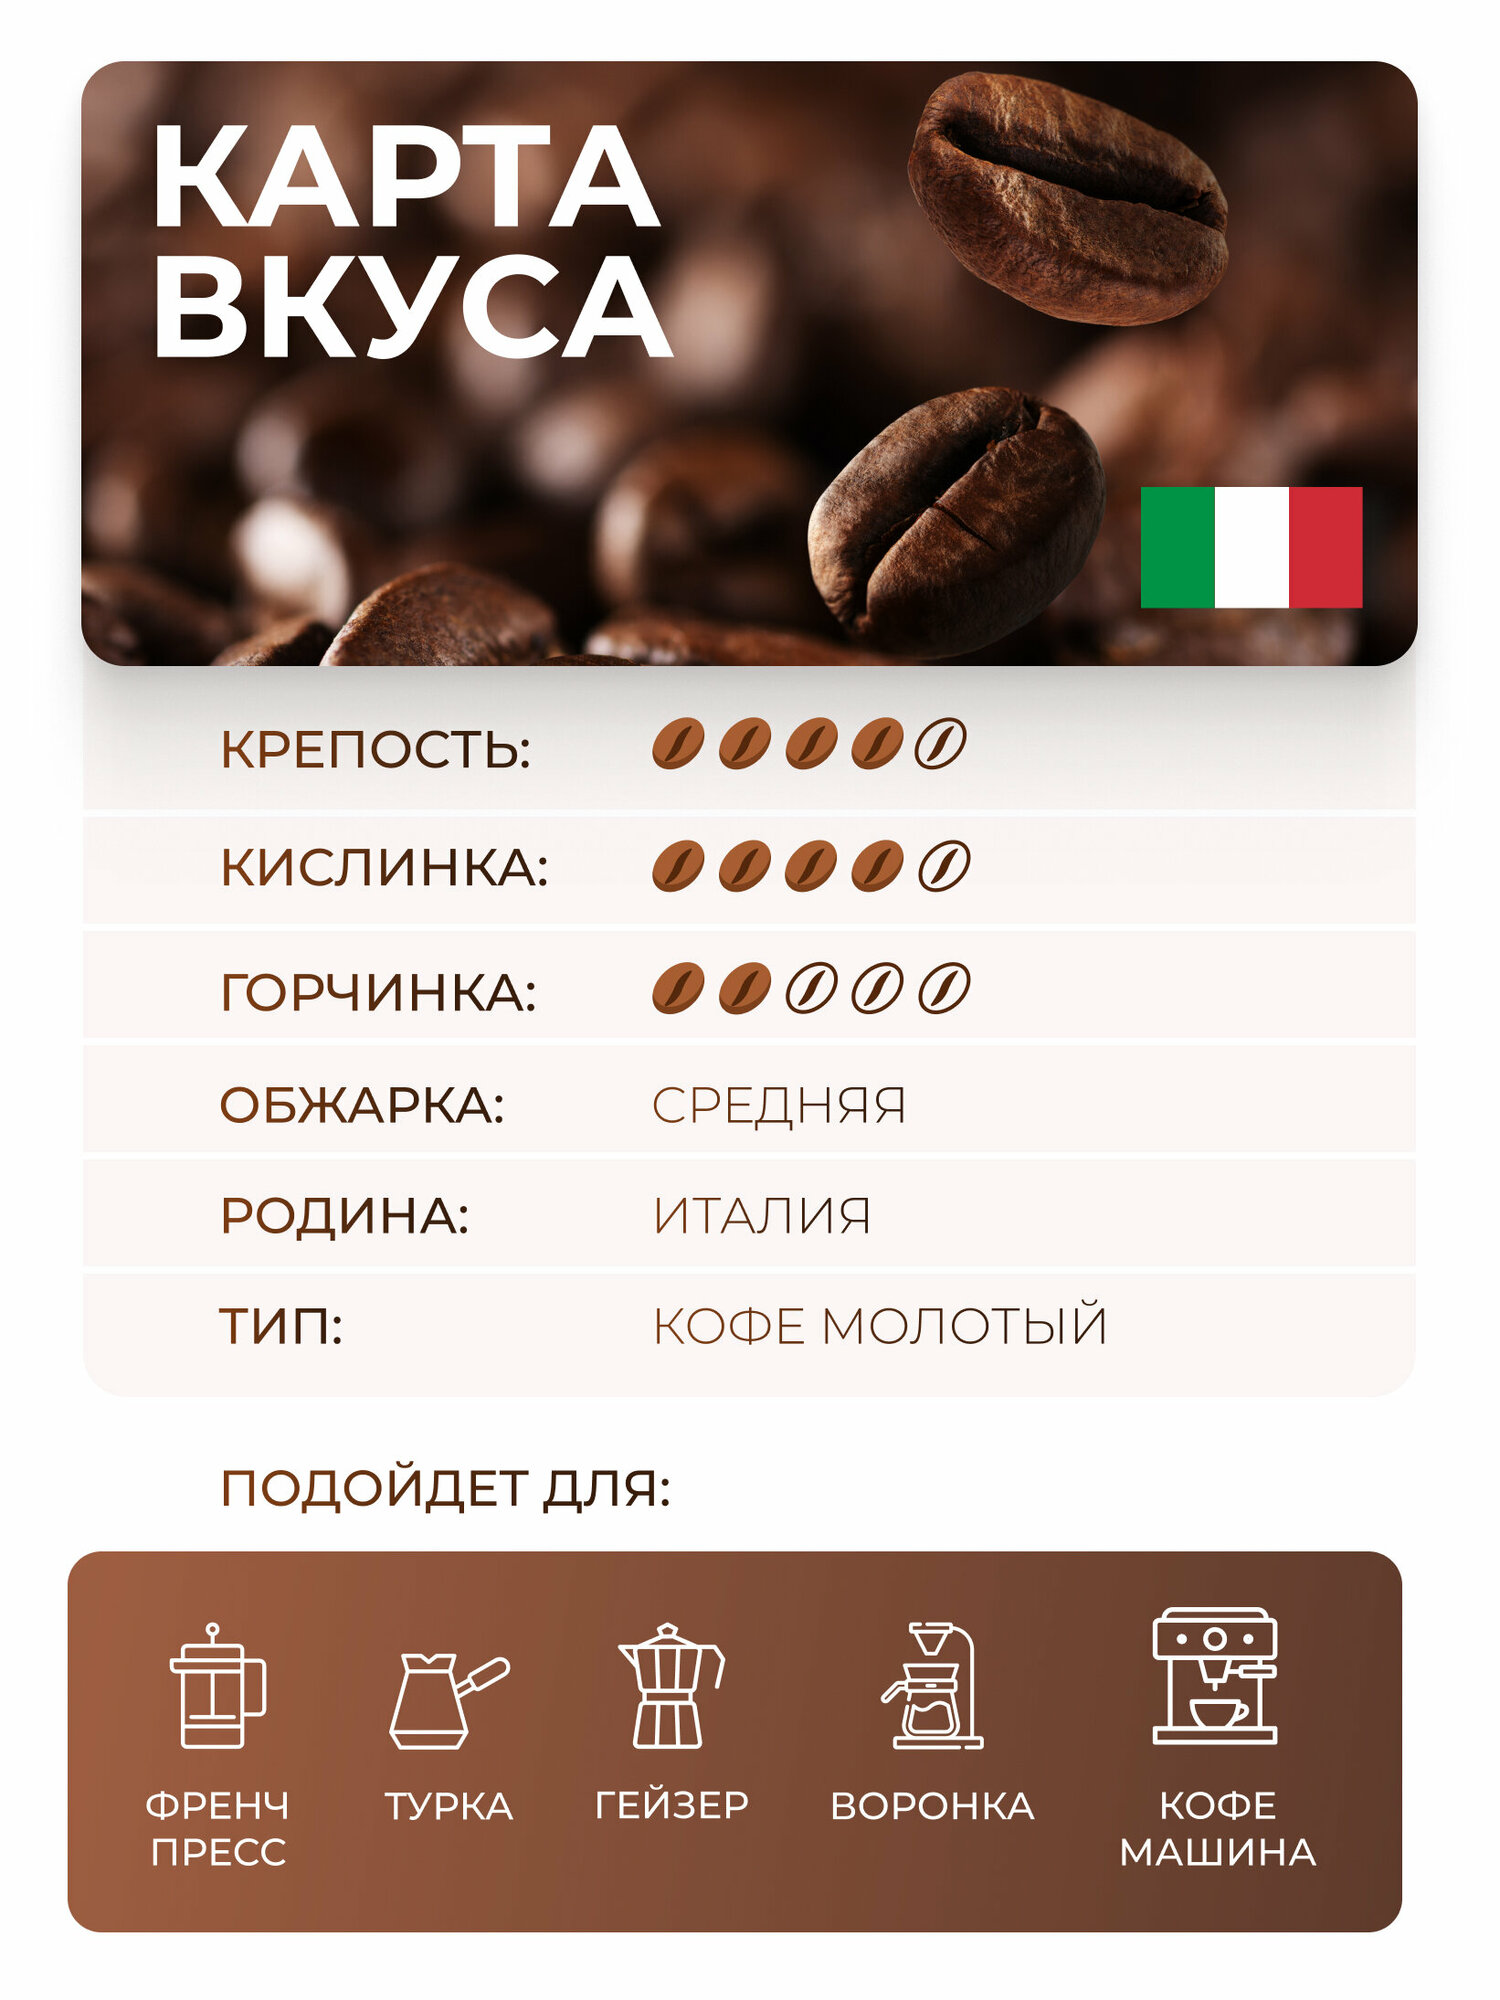 Кофе молотый Hausbrandt Espresso, 250 гр. (ж. б.)